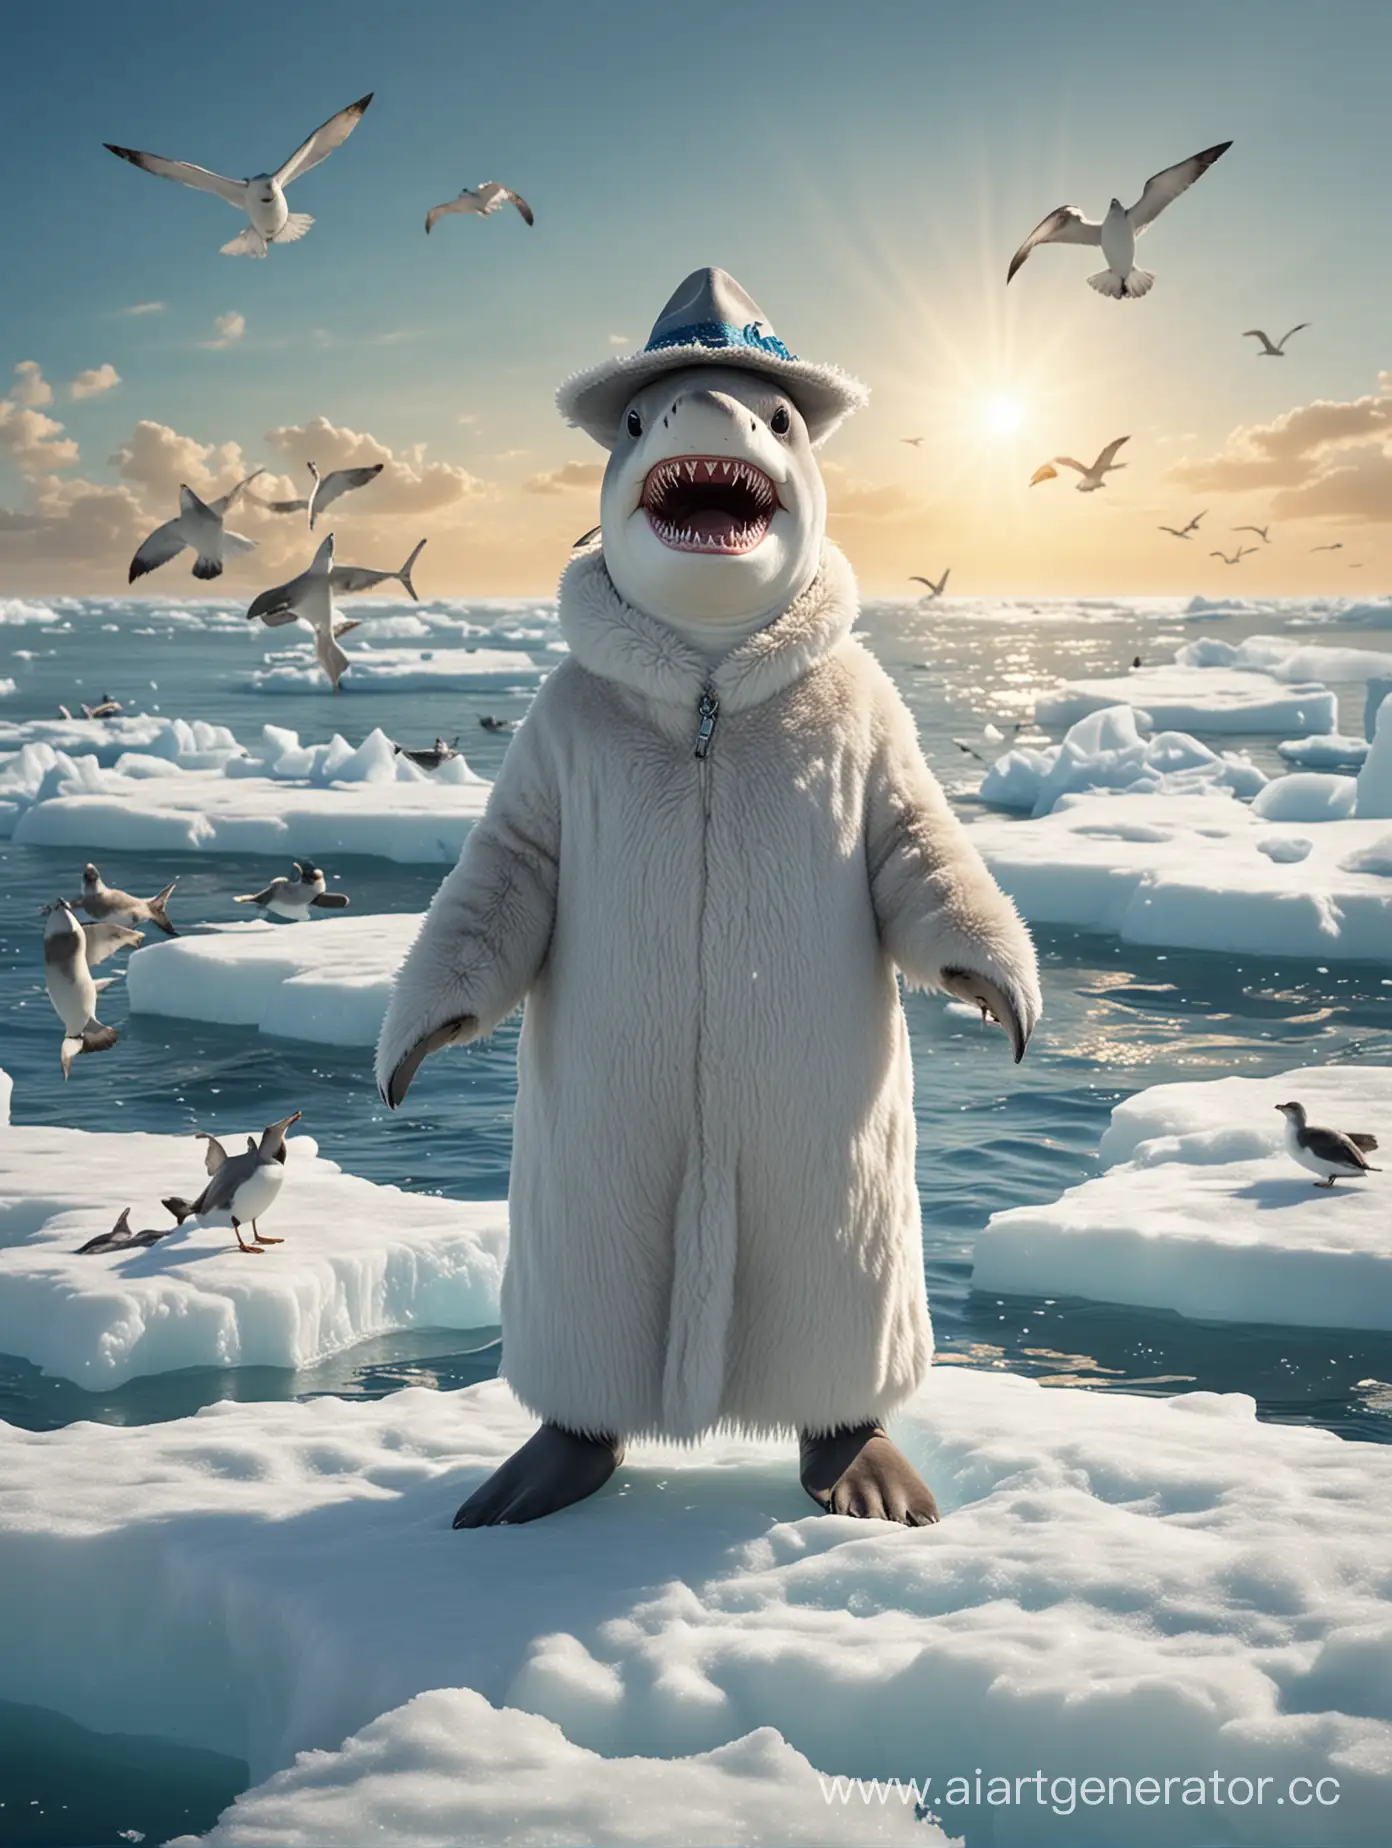 Smiling-Shark-in-Fur-Coat-on-Ice-Floe-Under-Sunny-Sky